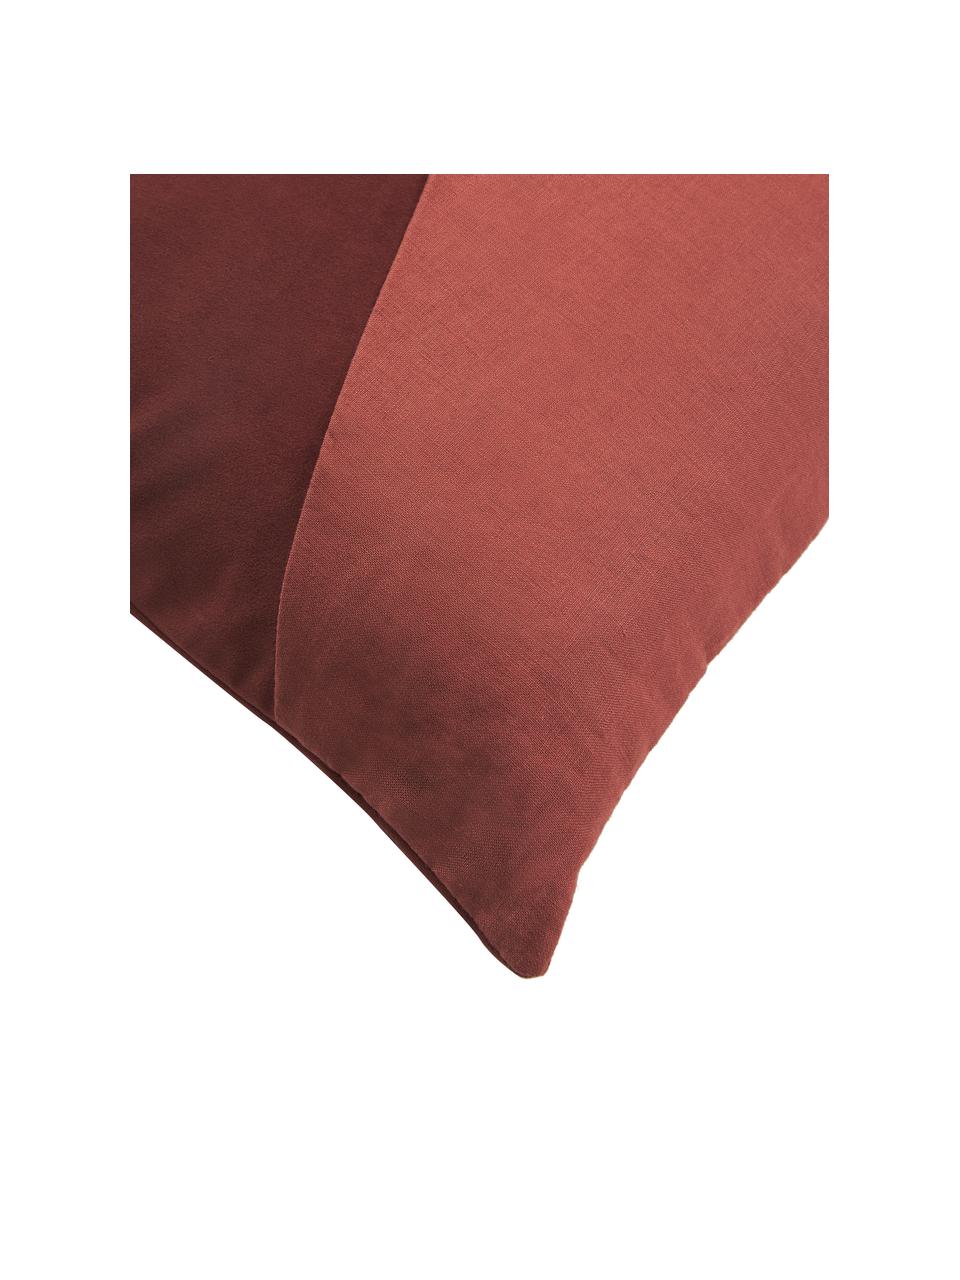 Kussenhoes Adelaide van fluweel/linnen in rood, Rood, roze, B 45 x L 45 cm